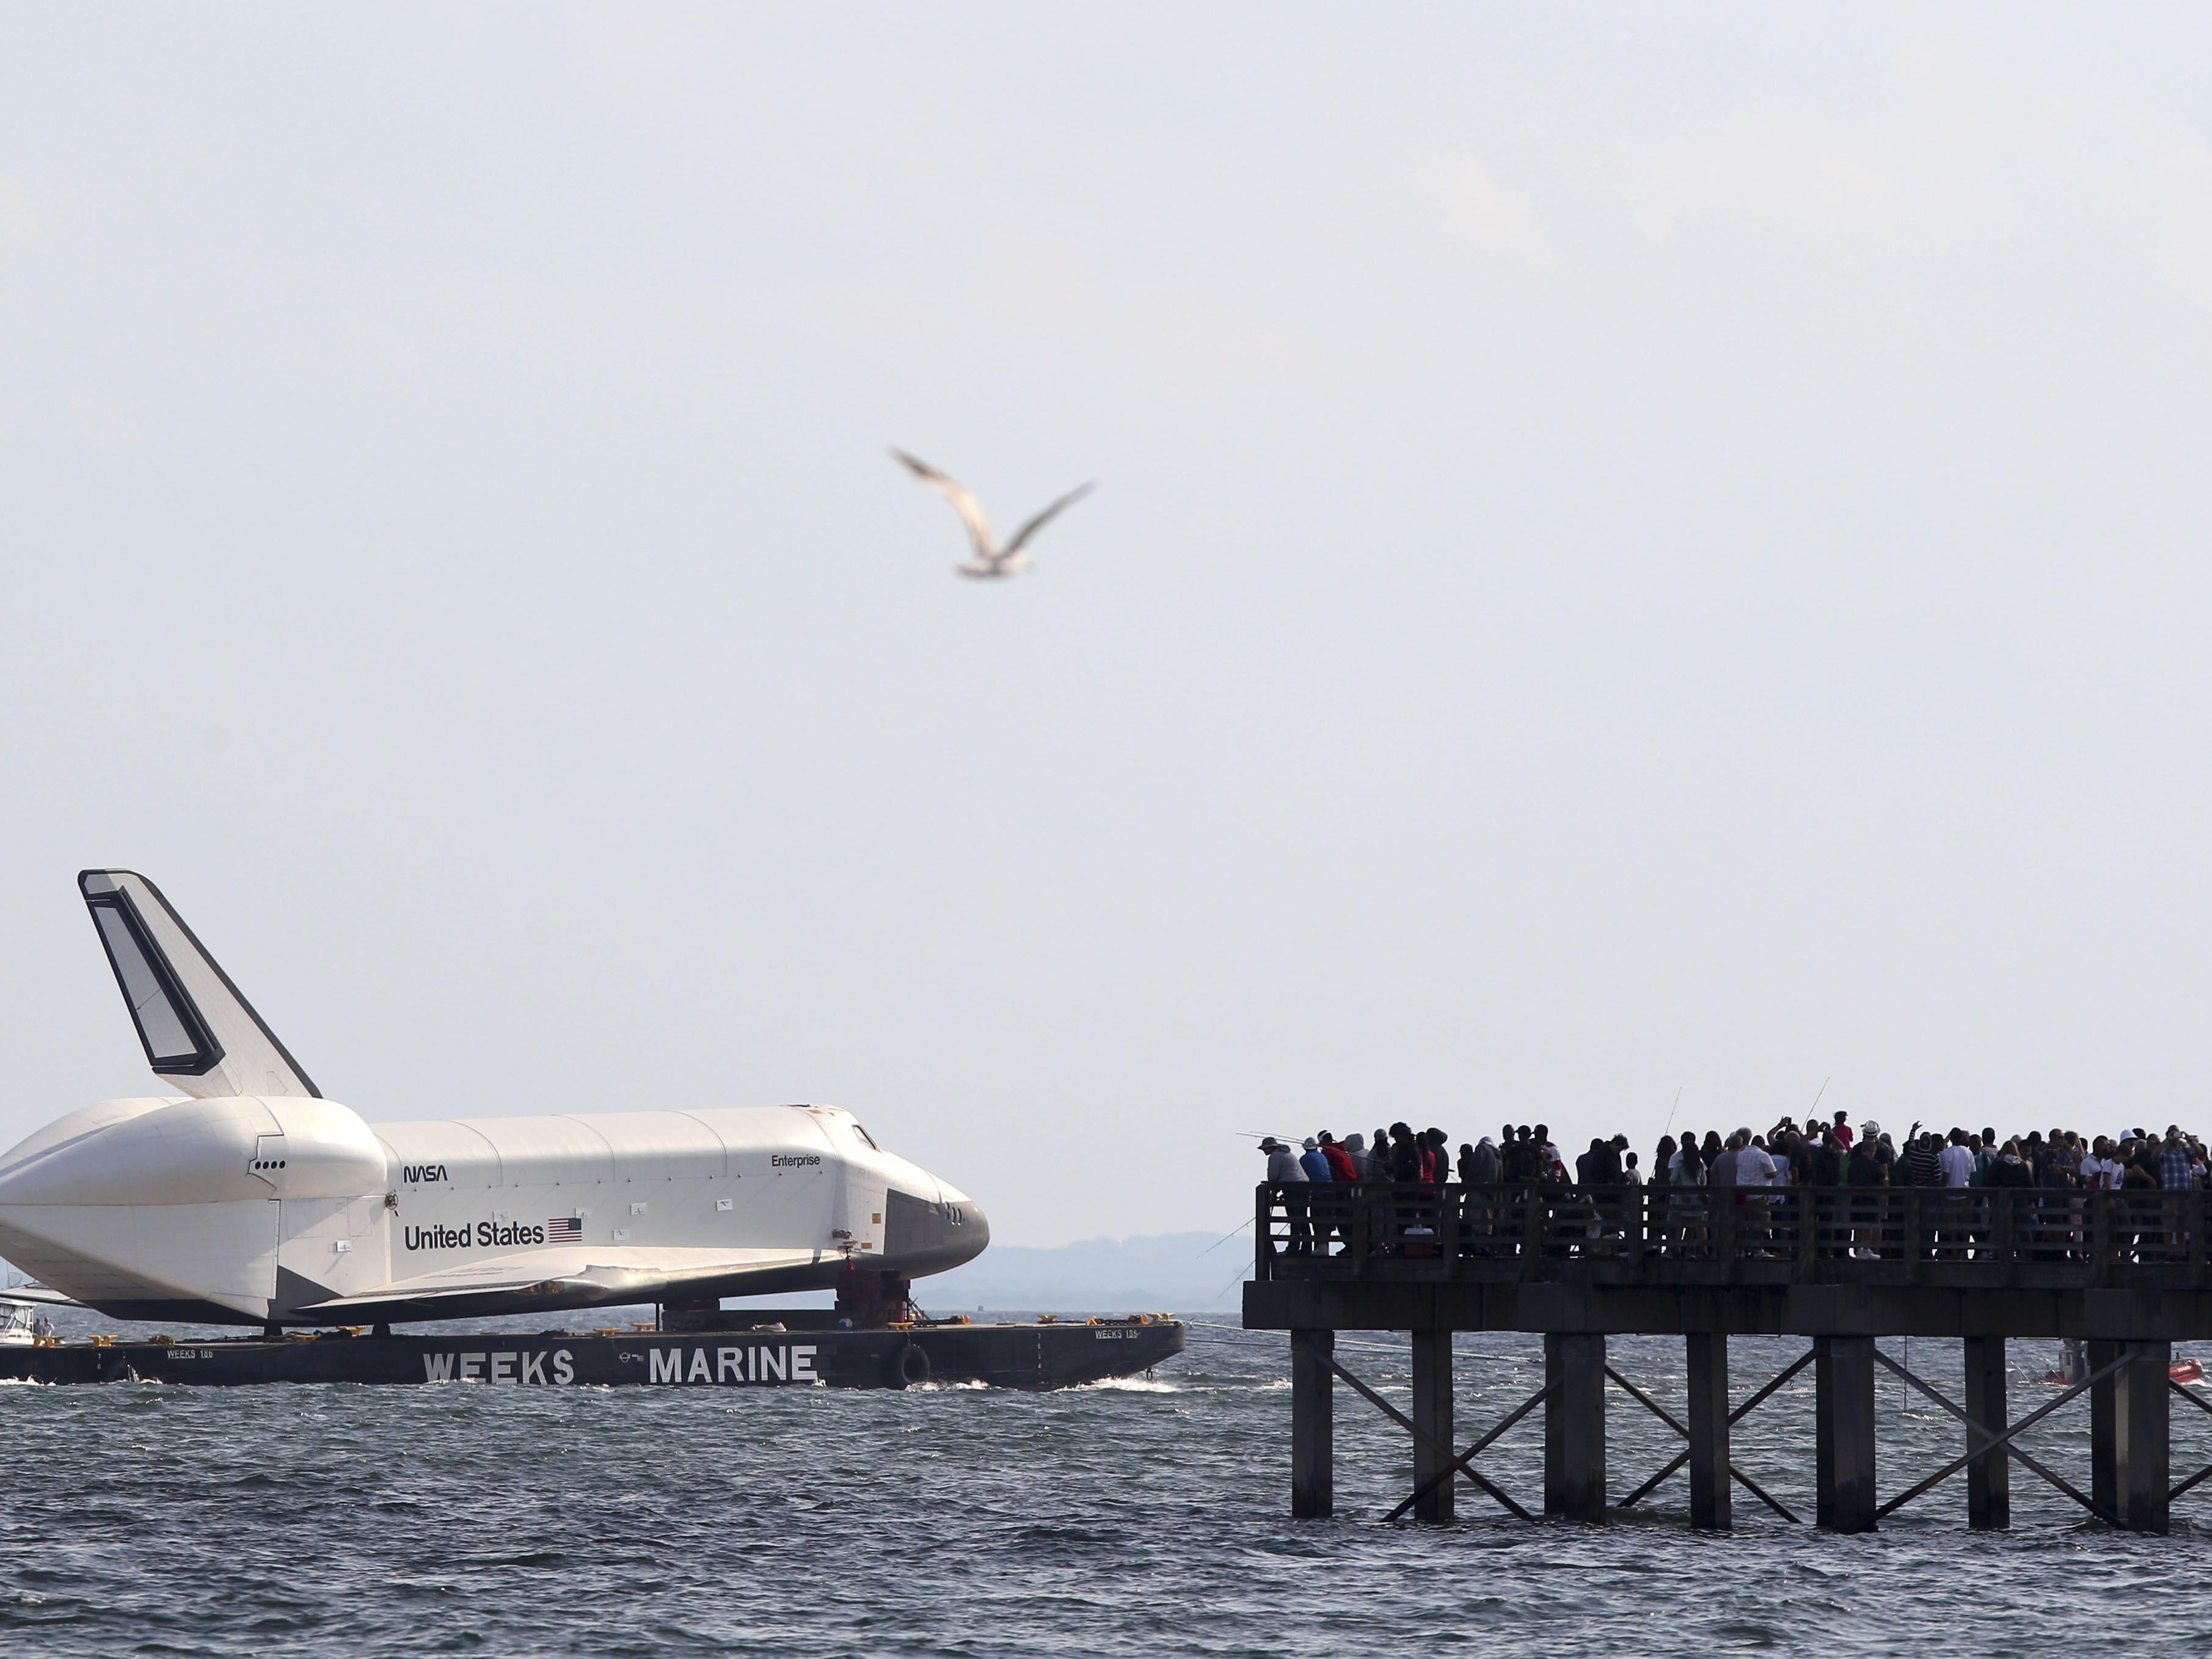 Nicht alltäglich: Das Space-Shuttle "Enterprise" schippert über den Hudson.